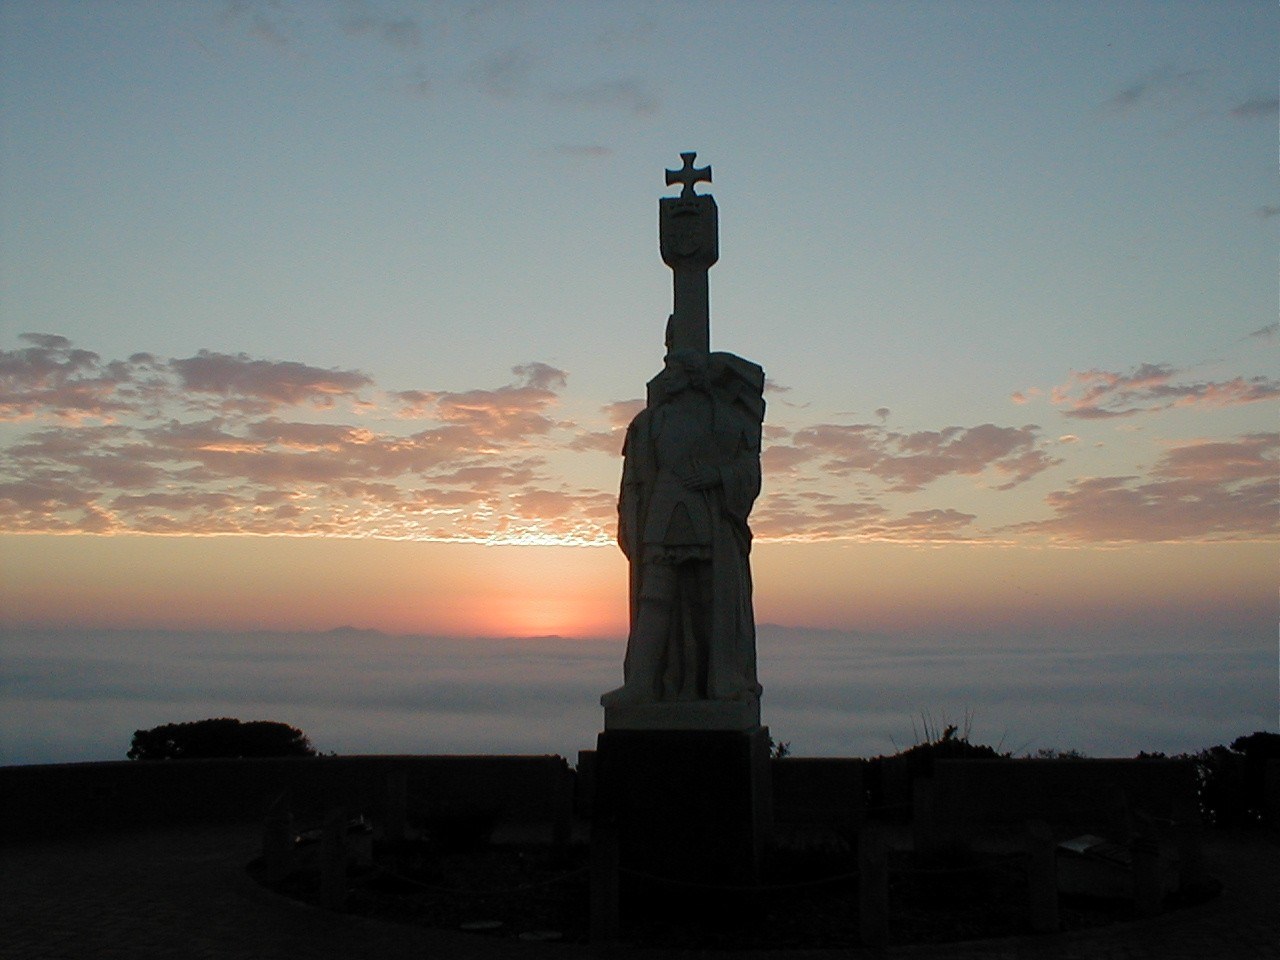 Sunrise behind Cabrillo statue